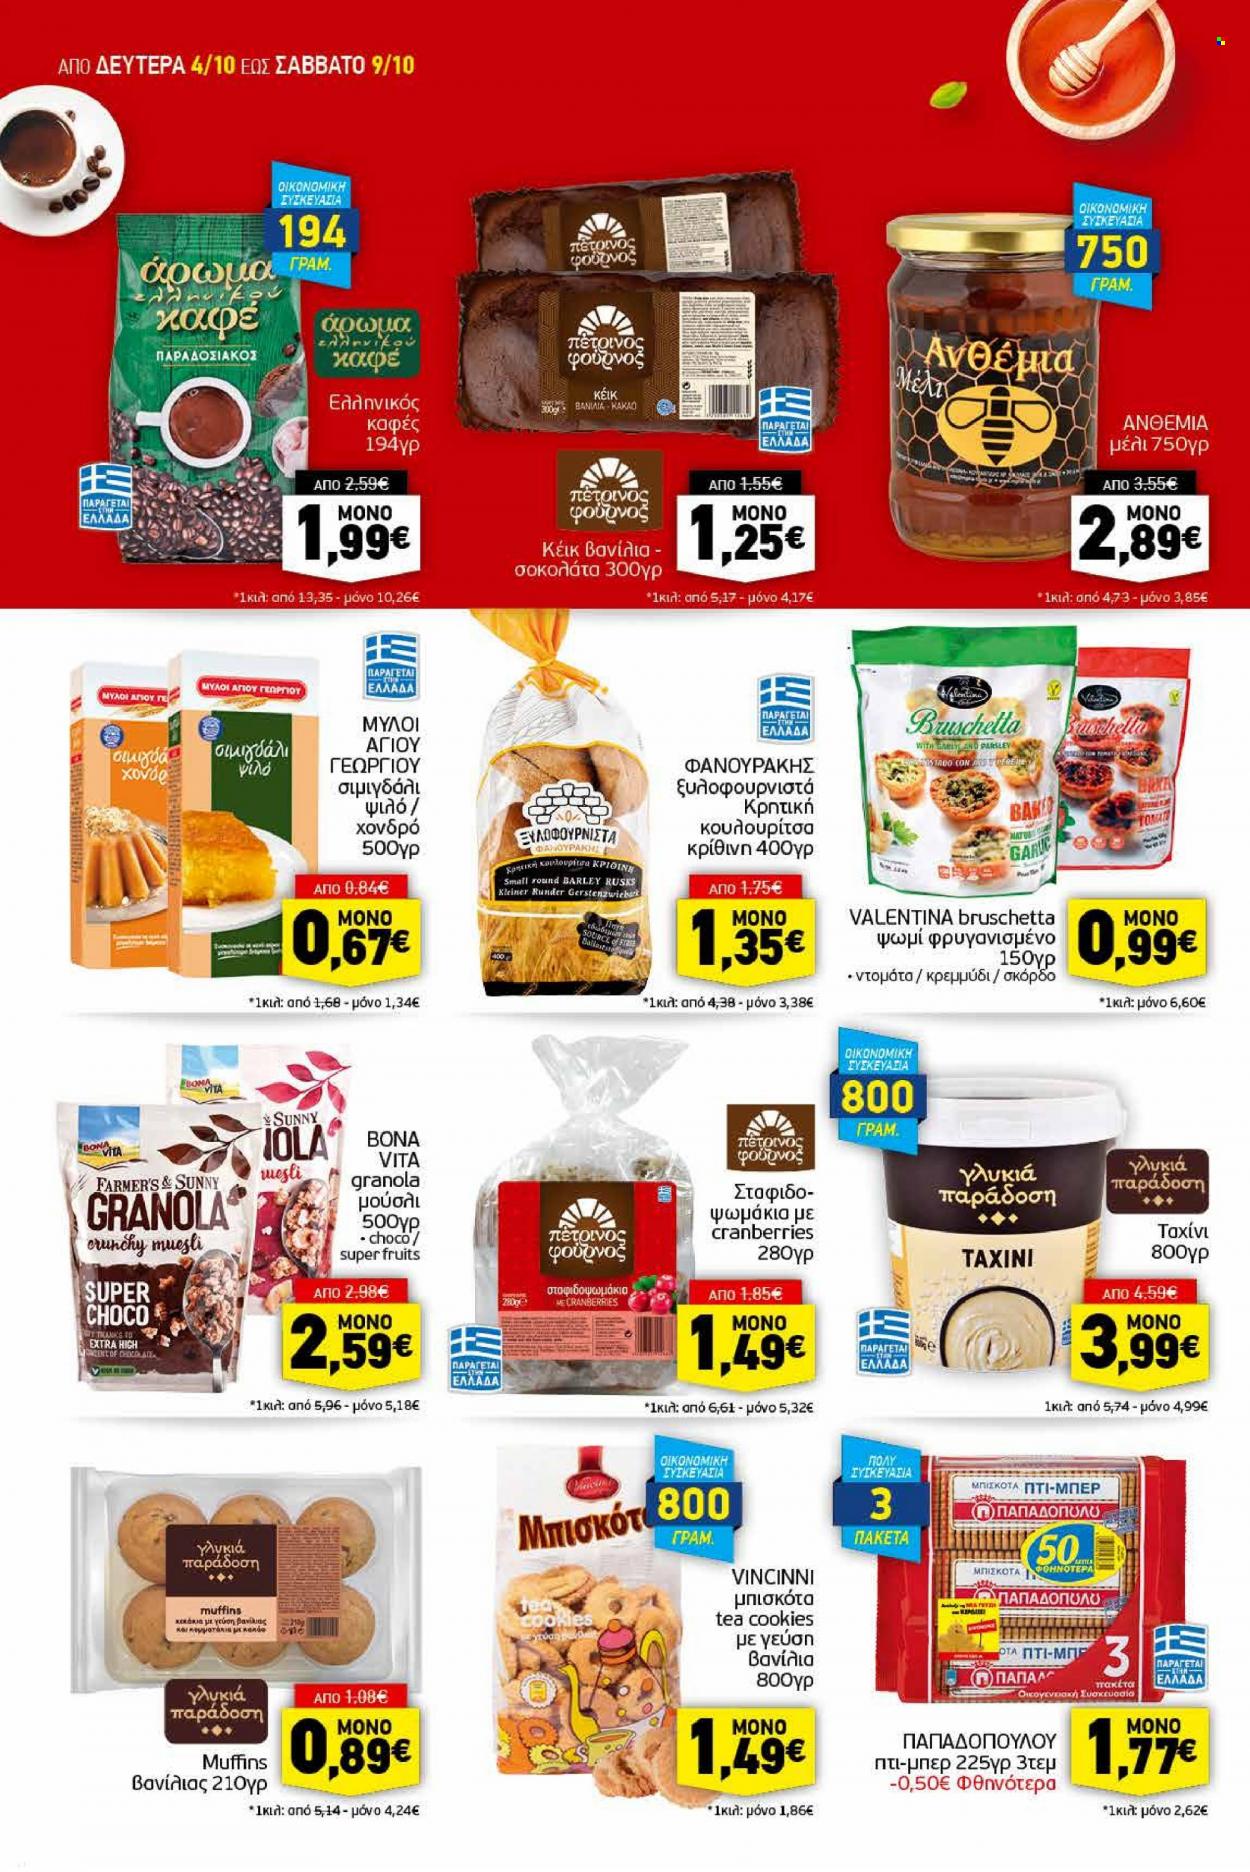 thumbnail - Φυλλάδια Discount Markt - 04.10.2021 - 09.10.2021 - Εκπτωτικά προϊόντα - ψωμί, muffins, κέικ, μπισκότα, ντομάτα, cookies, σοκολάτα, κακάο, granola, μέλι, καφές. Σελίδα 8.